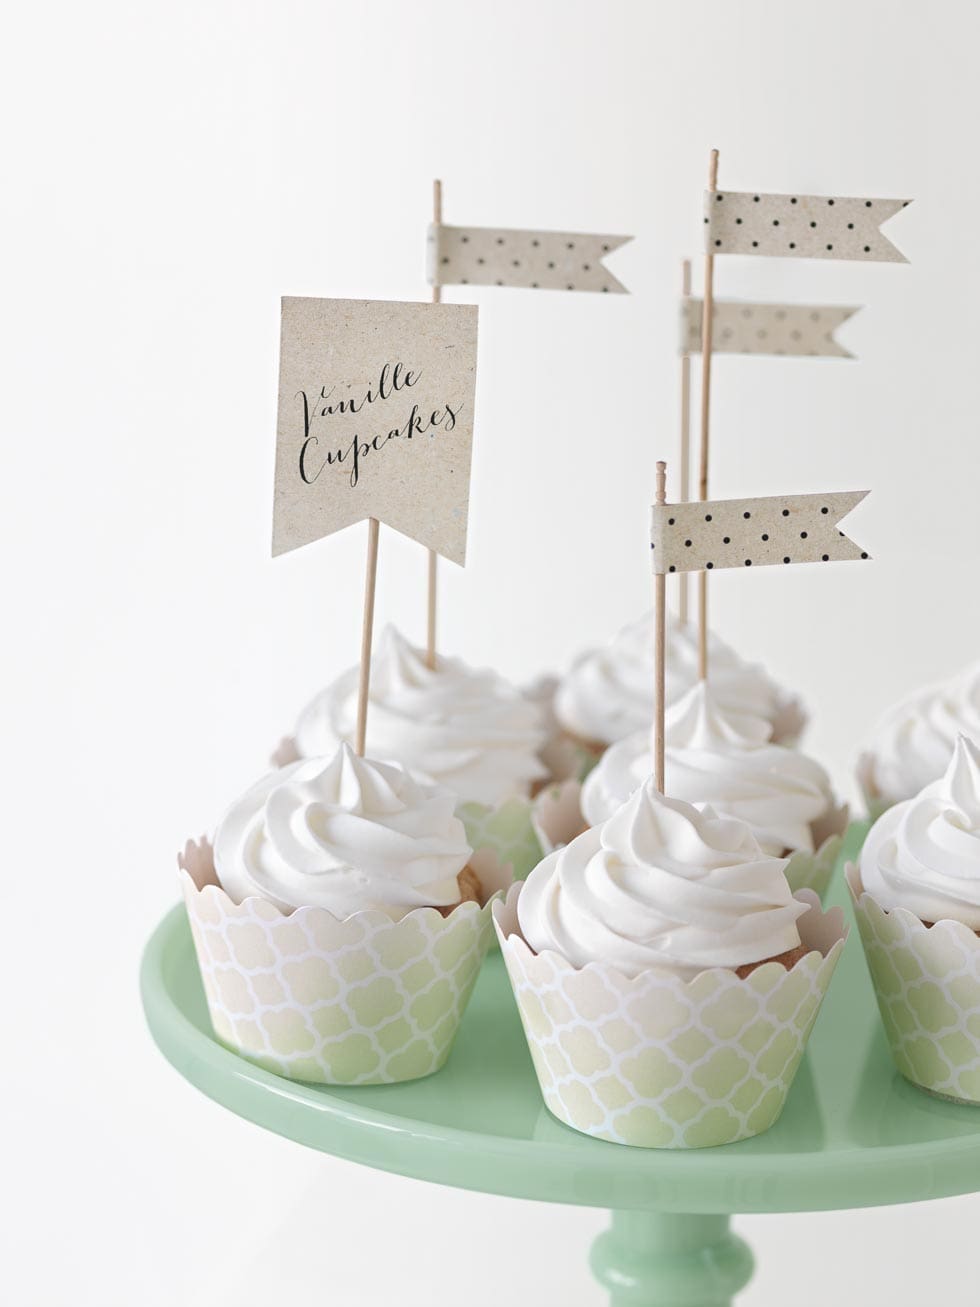 Dessertable Cupcakes